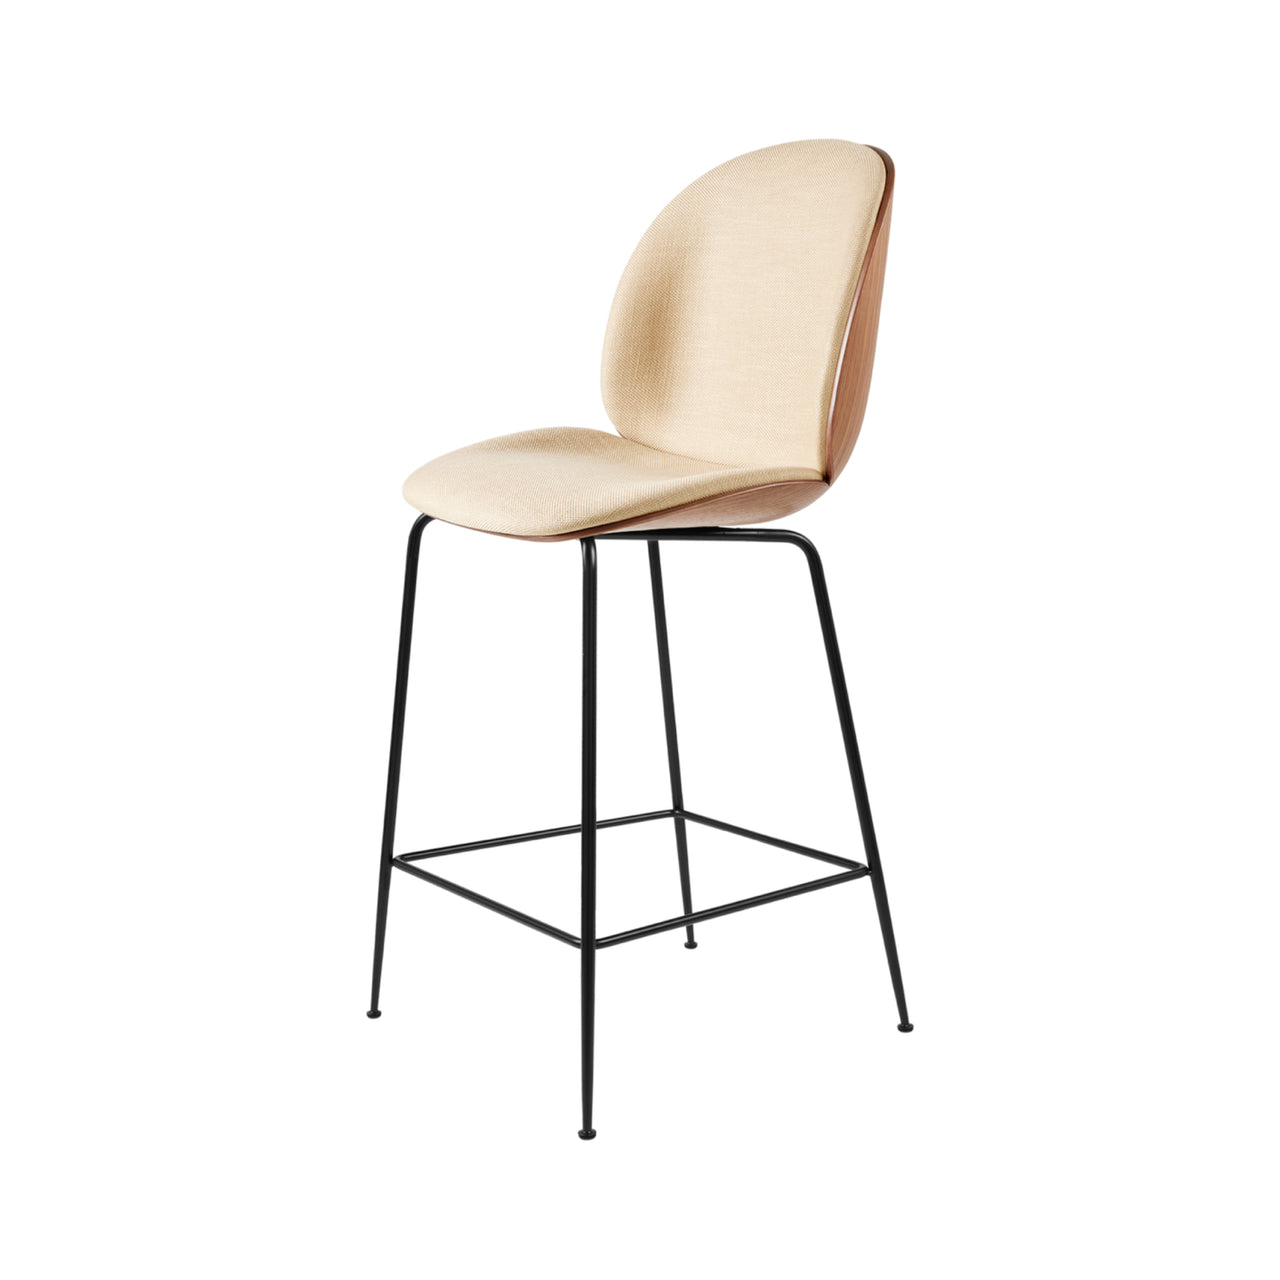 Beetle Counter Chair: Veneer Shell + Front Upholstered + Black Matt + American Walnut